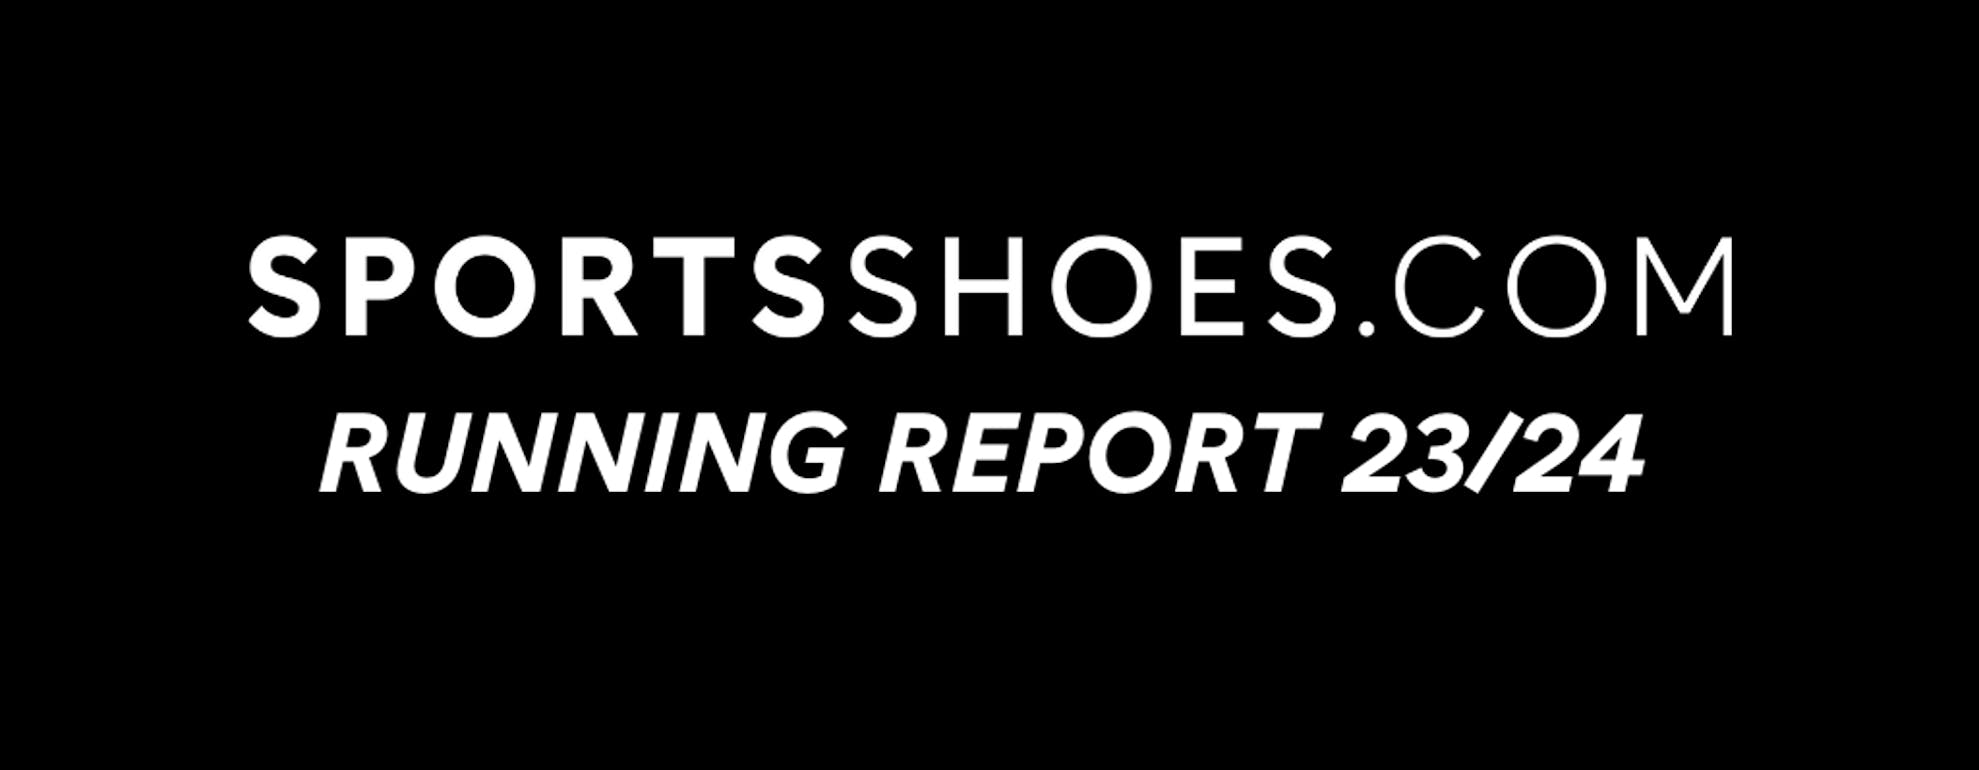 sportsshoes-running-report-2023-2024